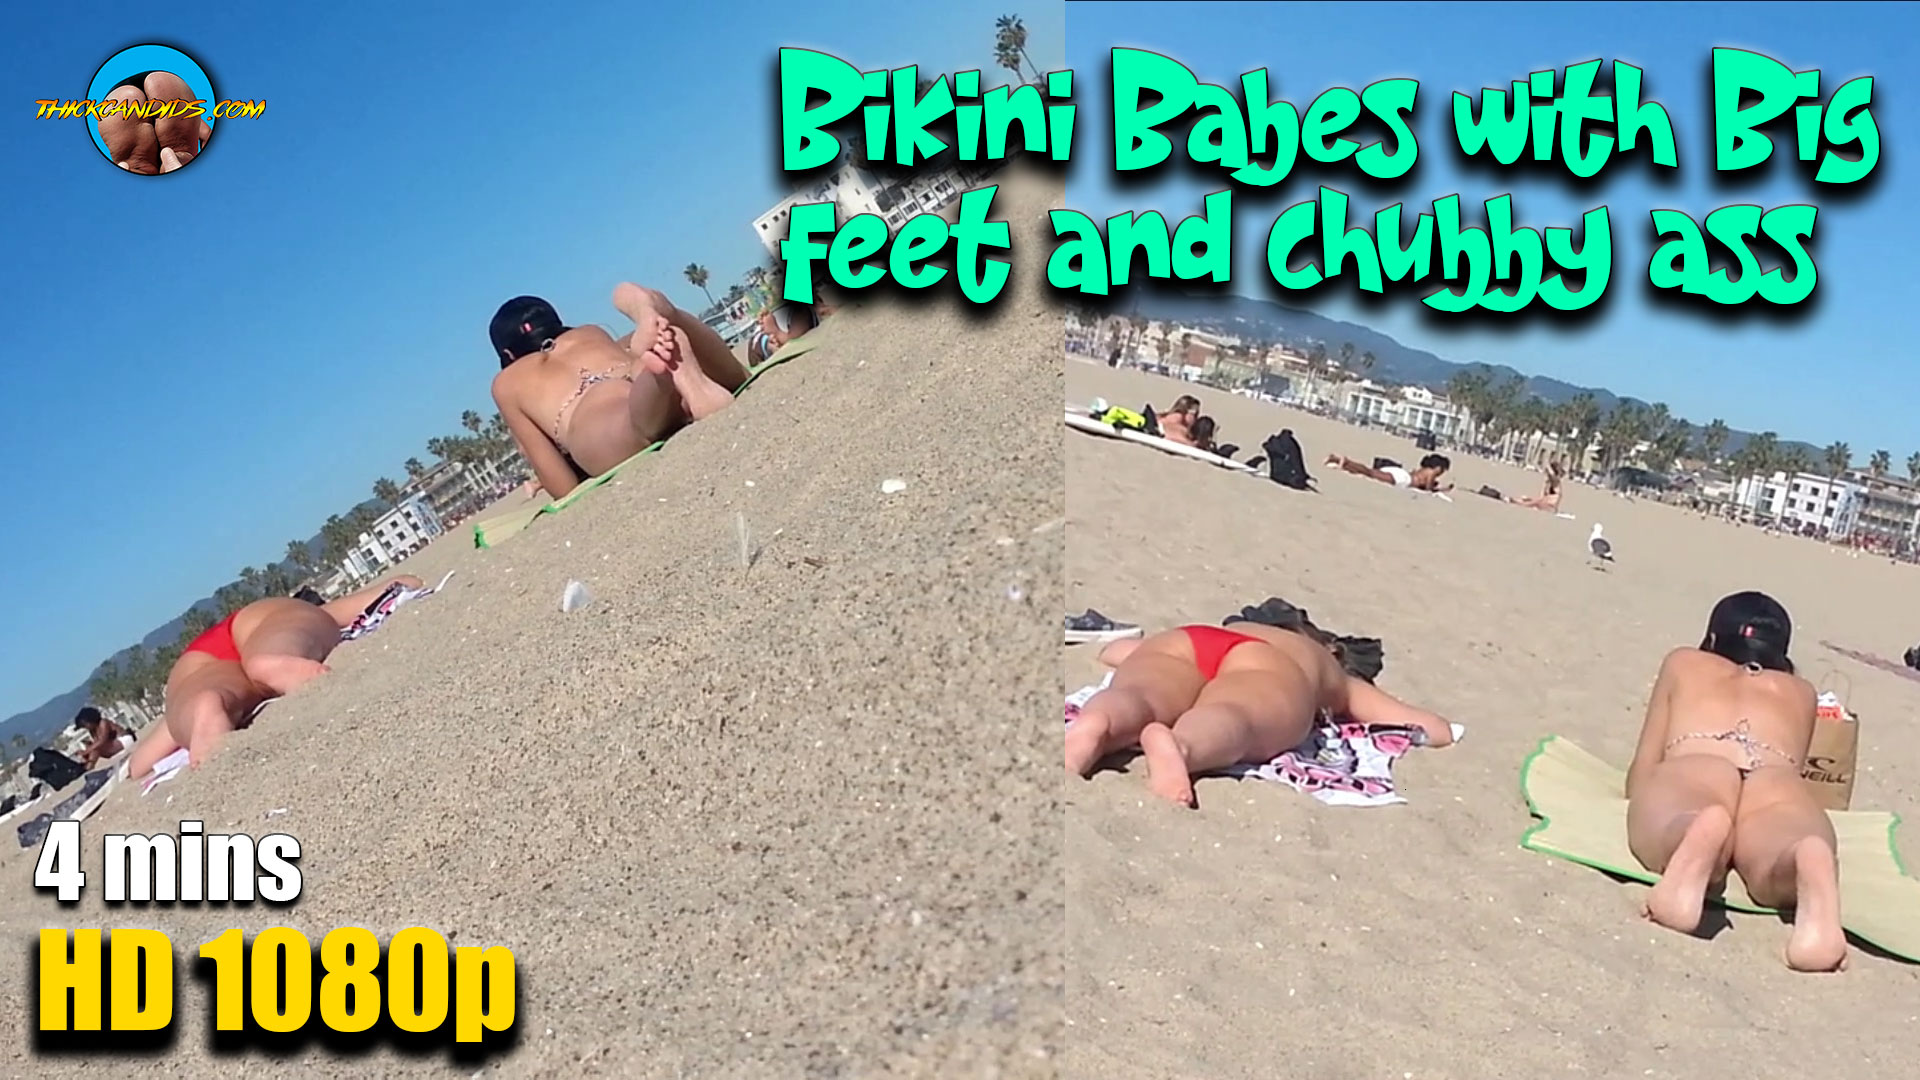 Bikini-Babes-with-Big-feet-and-chubby-ass